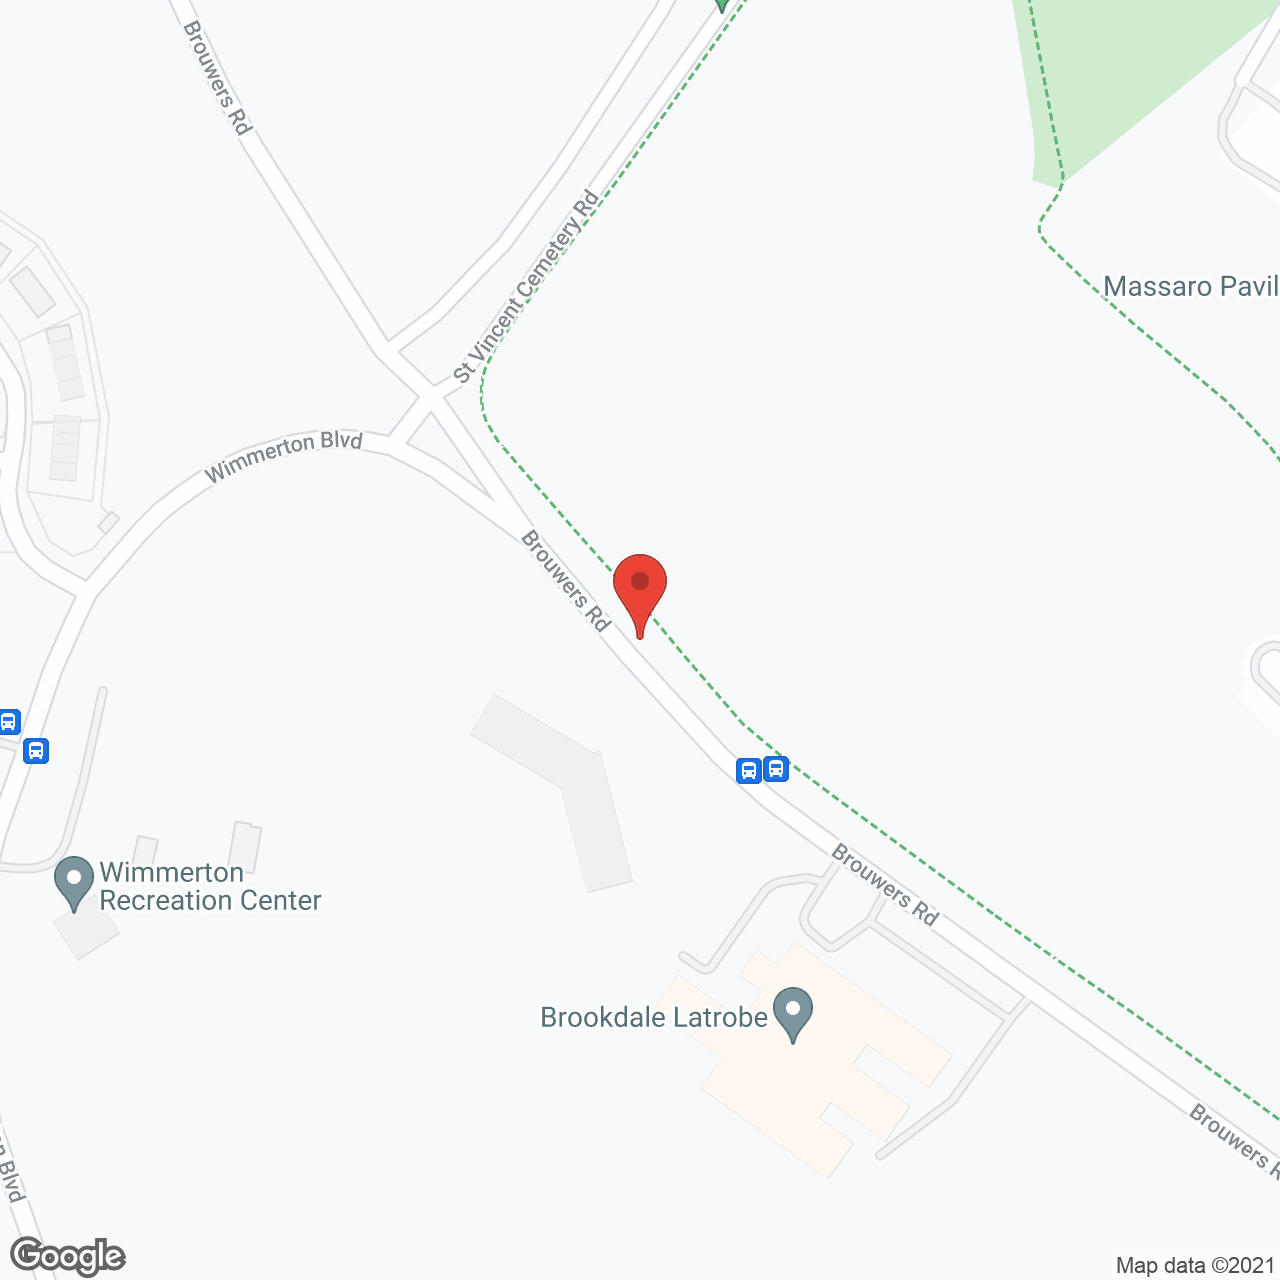 Brookdale Latrobe in google map